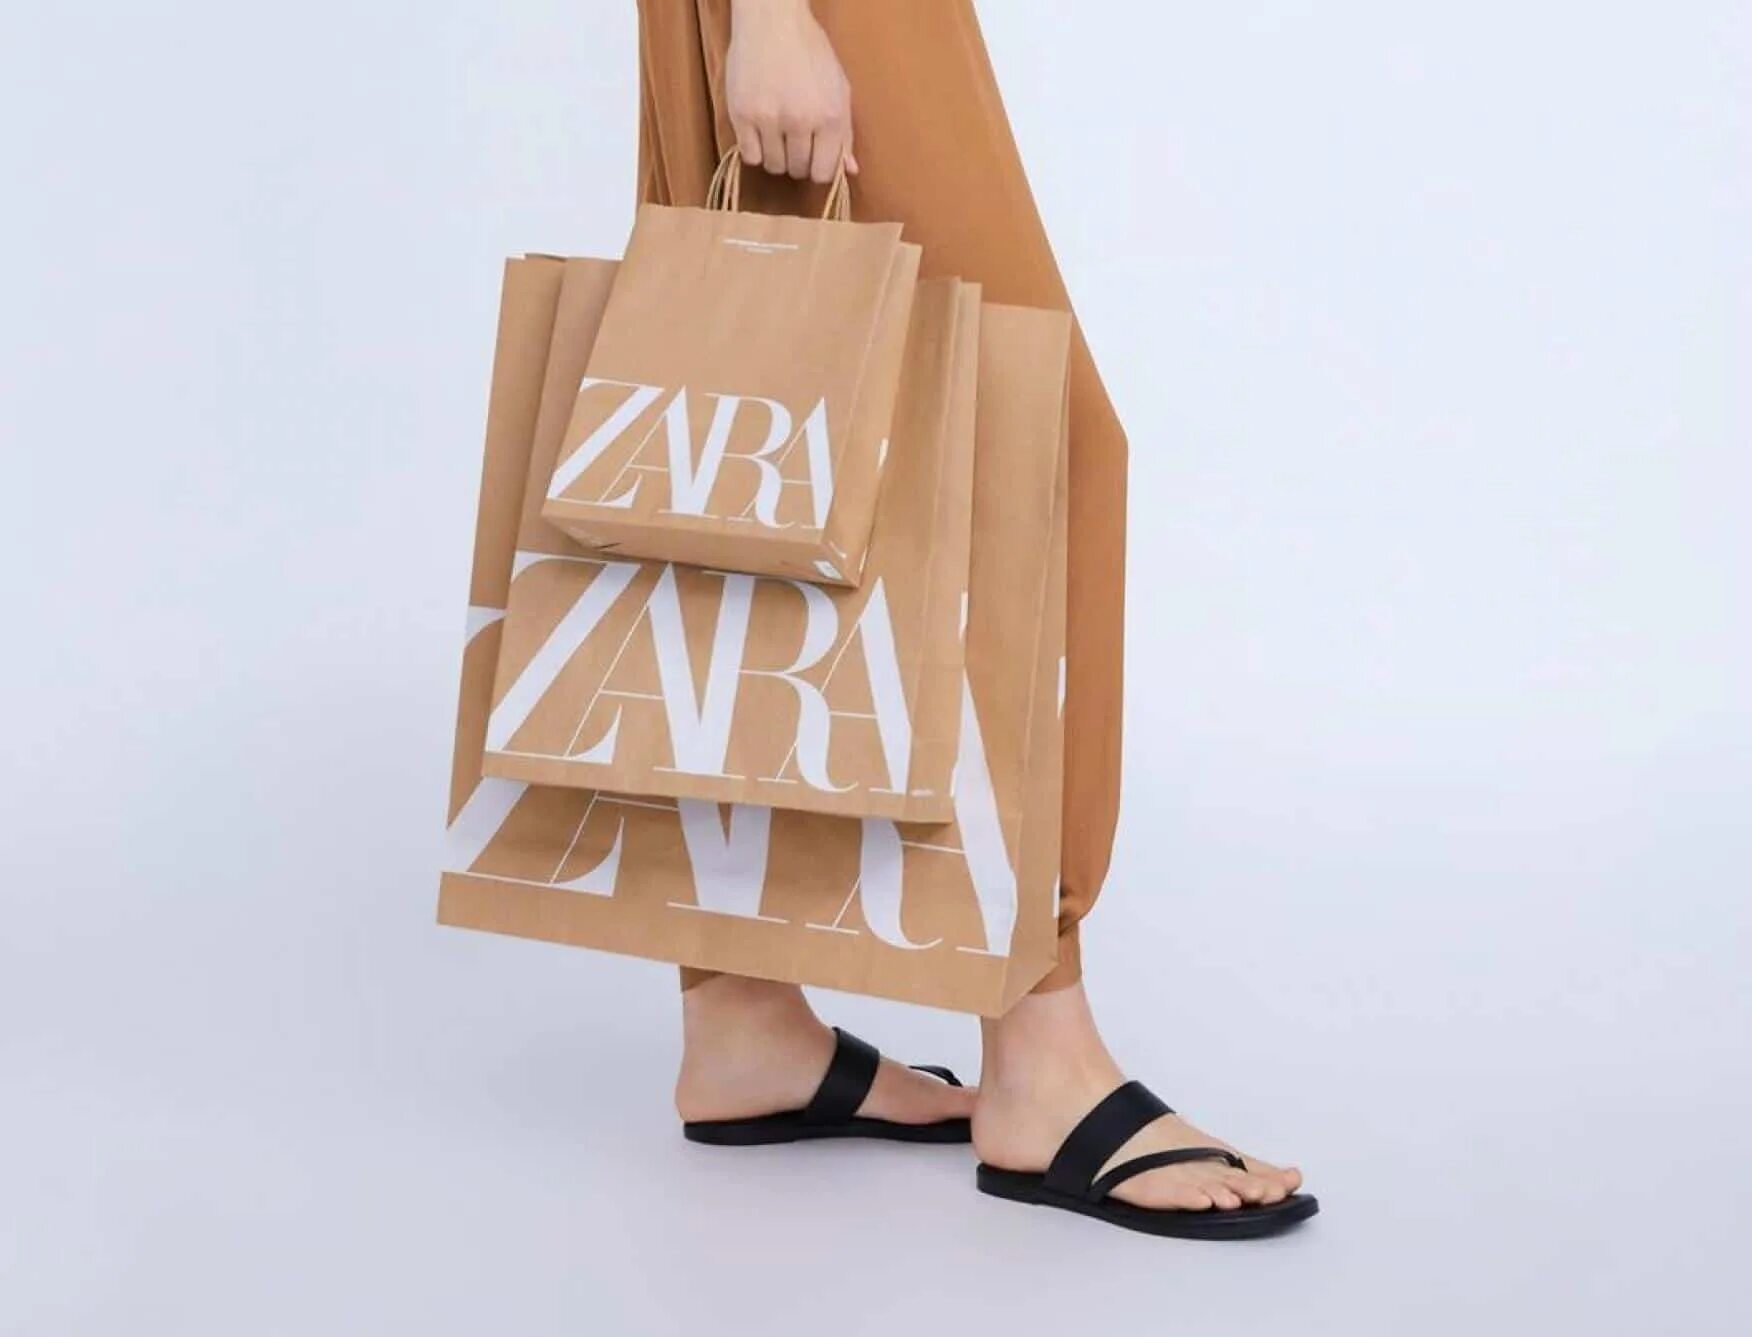 Х зарам. Пакеты из Zara HM бершка. Брендовые пакеты. Вещи из Zara.